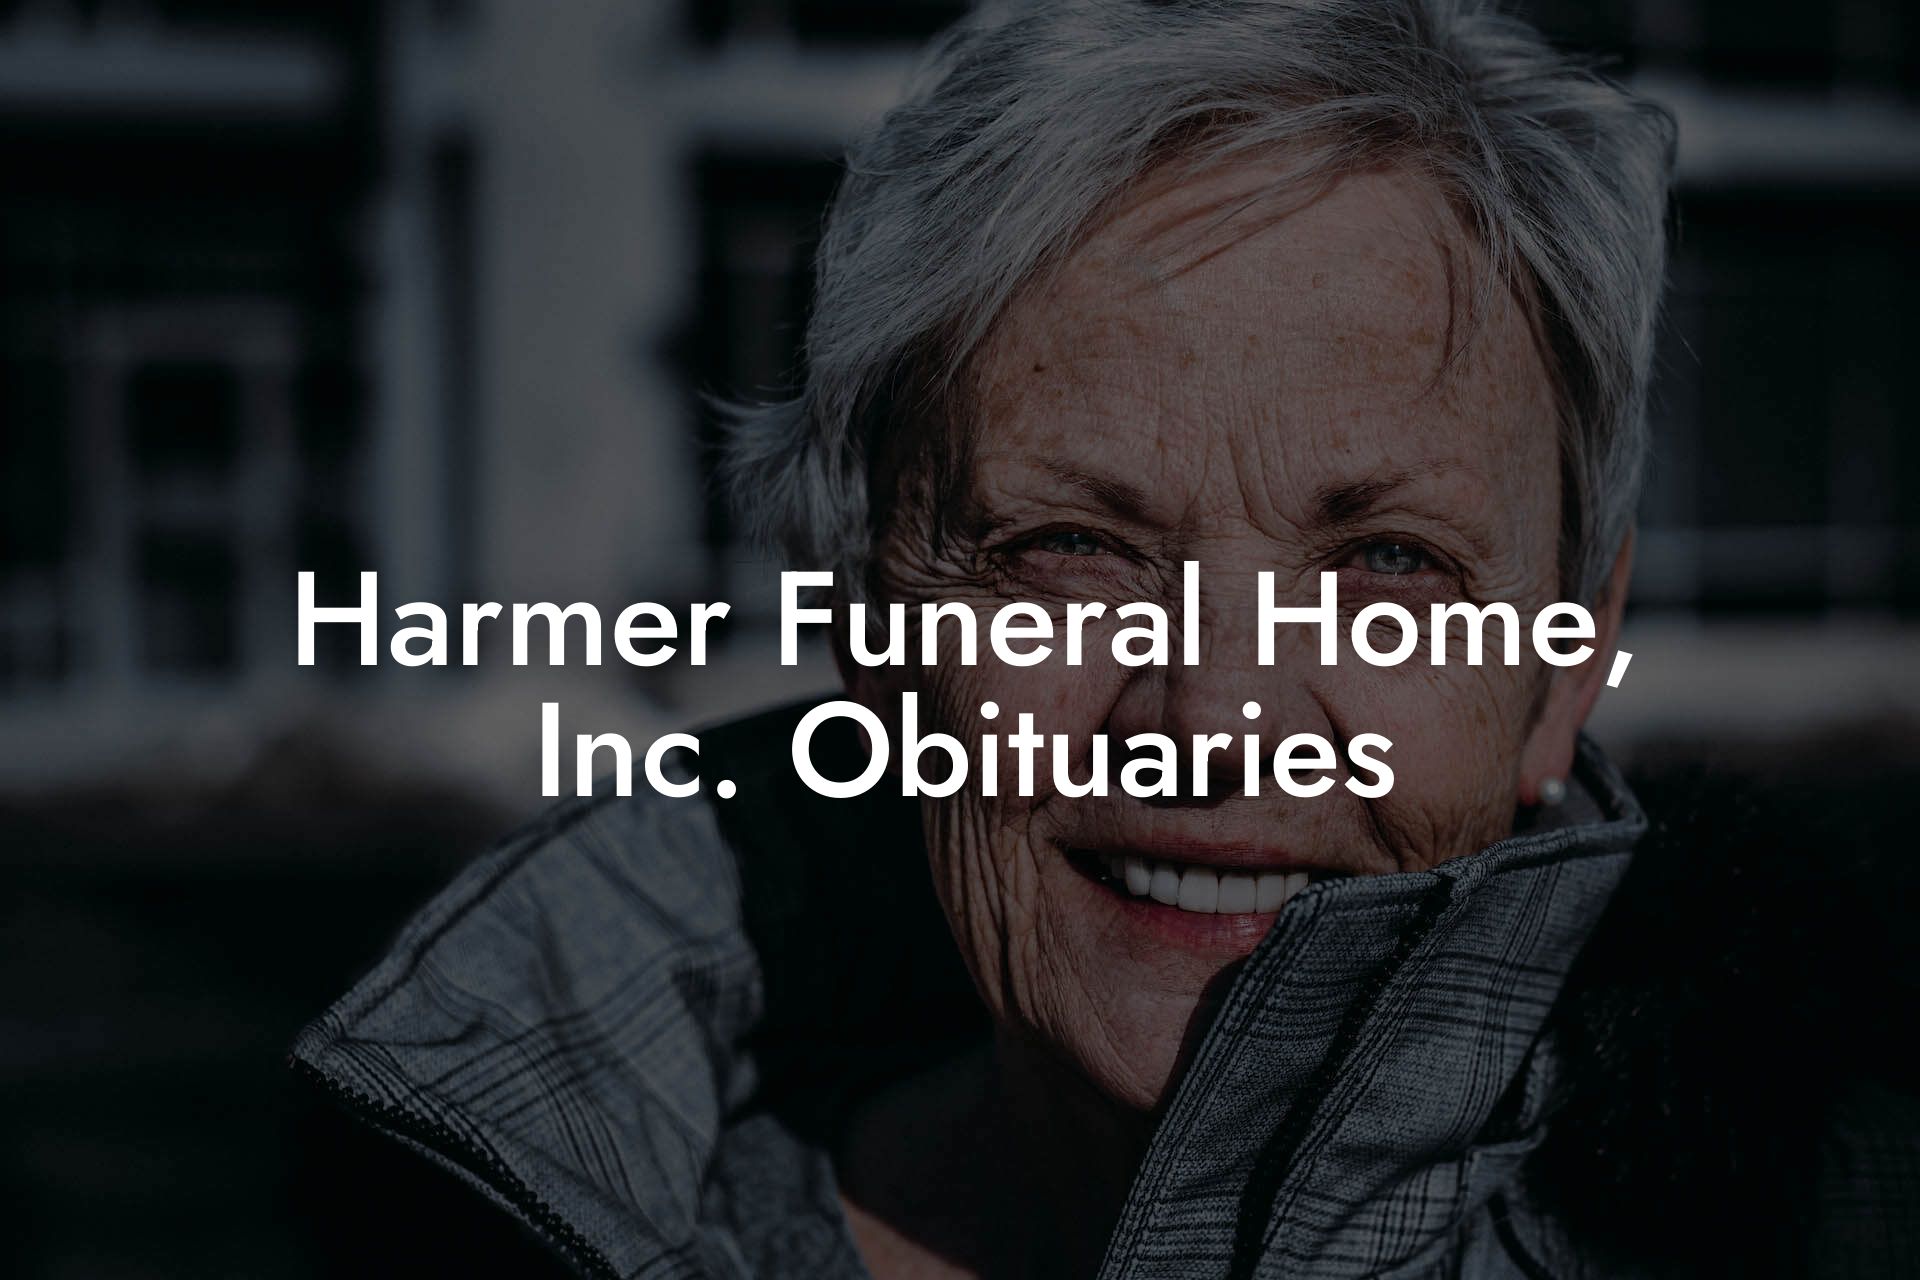 Harmer Funeral Home, Inc. Obituaries